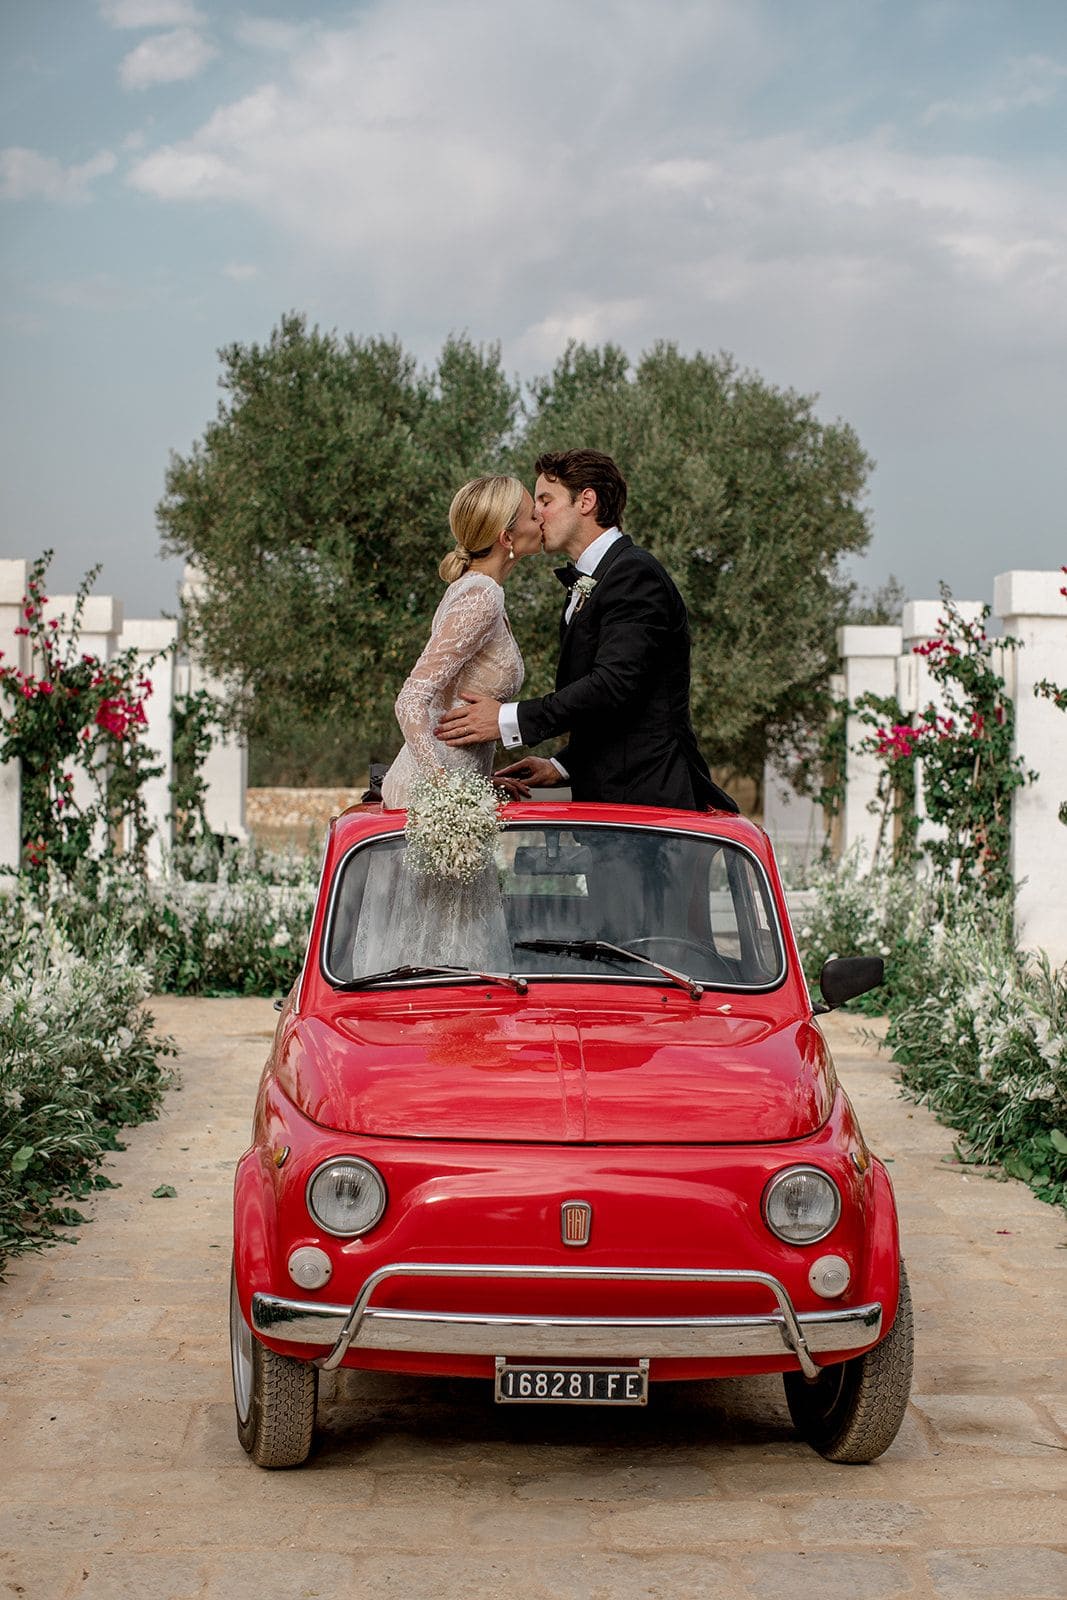 Bride groom kiss inside red car Puglia Italy